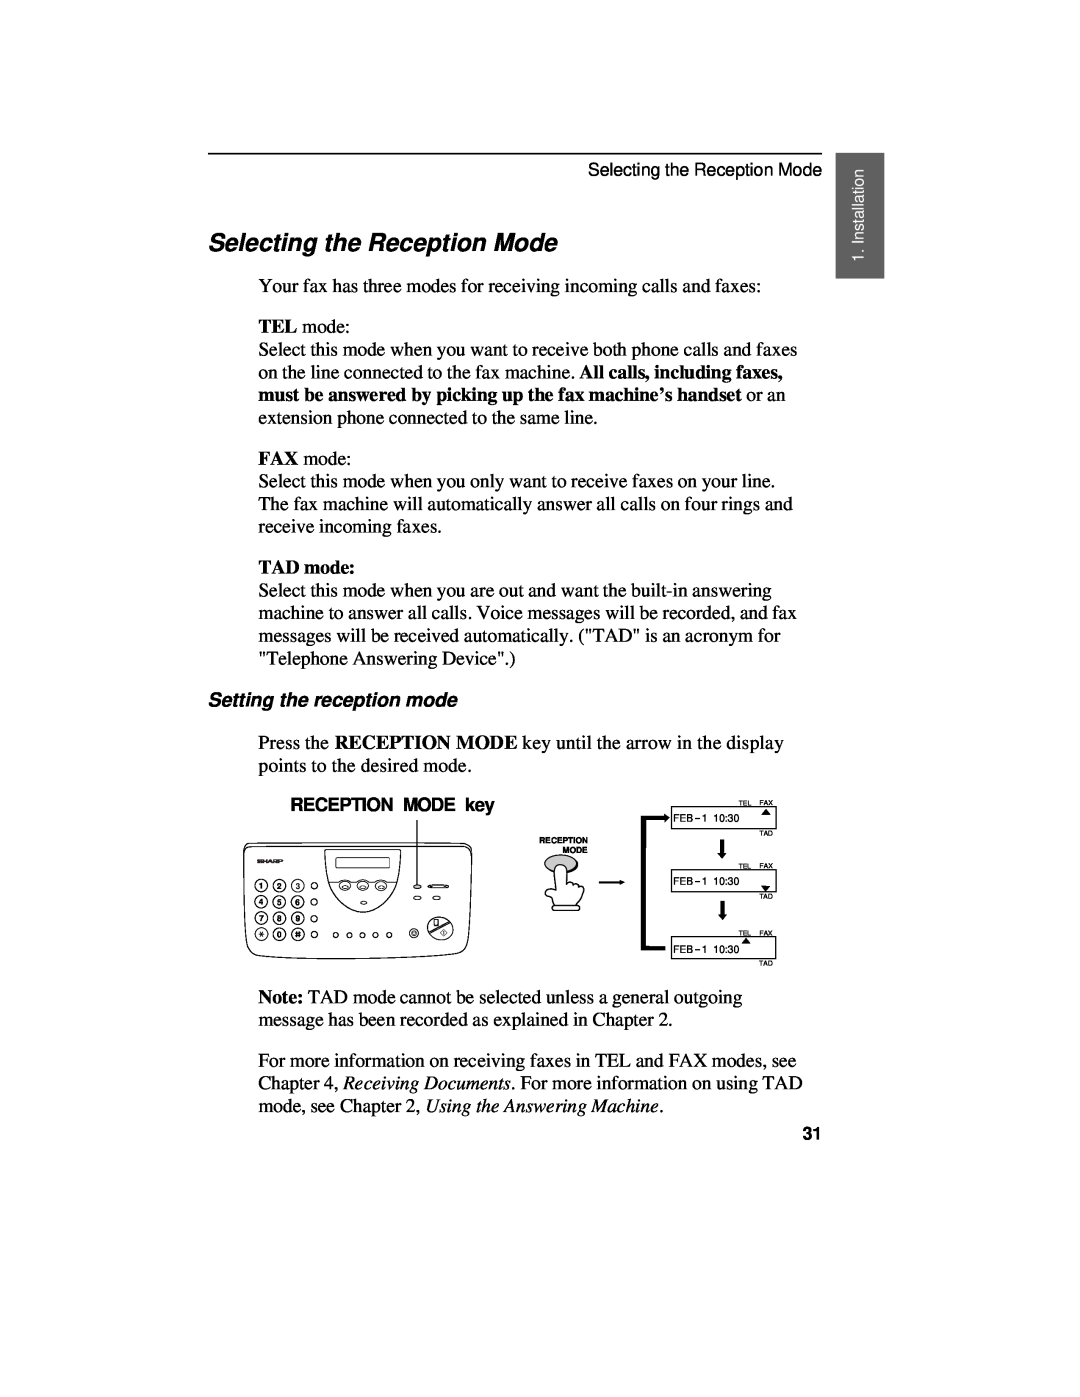 Sharp UX-460 operation manual Selecting the Reception Mode, TAD mode, Setting the reception mode 